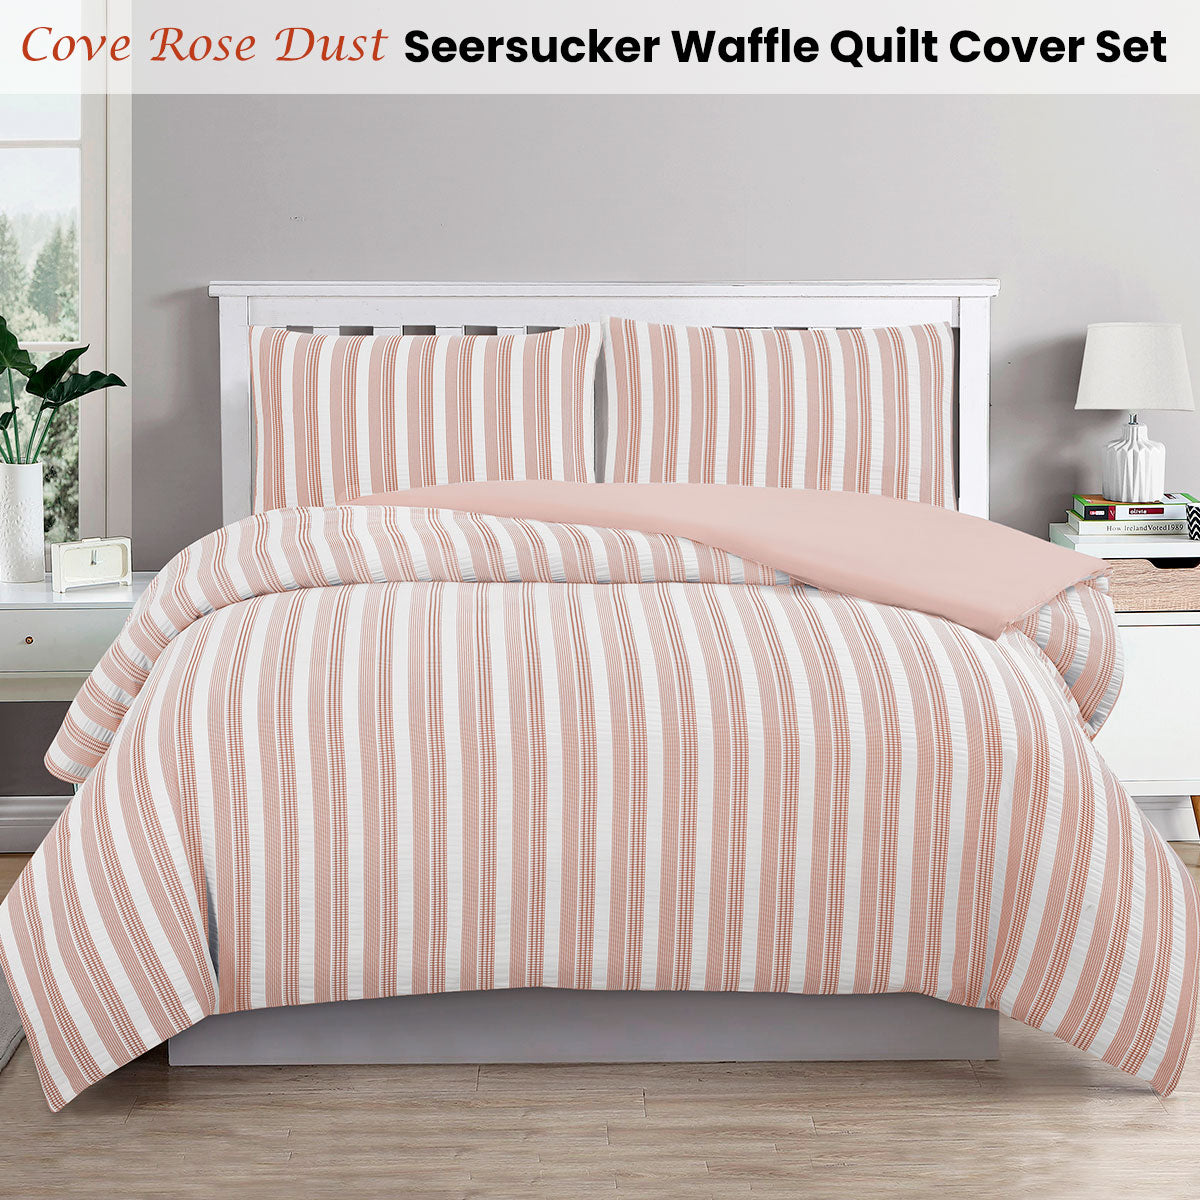 QUEEN 3-Piece Seersucker Waffle Quilt Cover Set - Peach